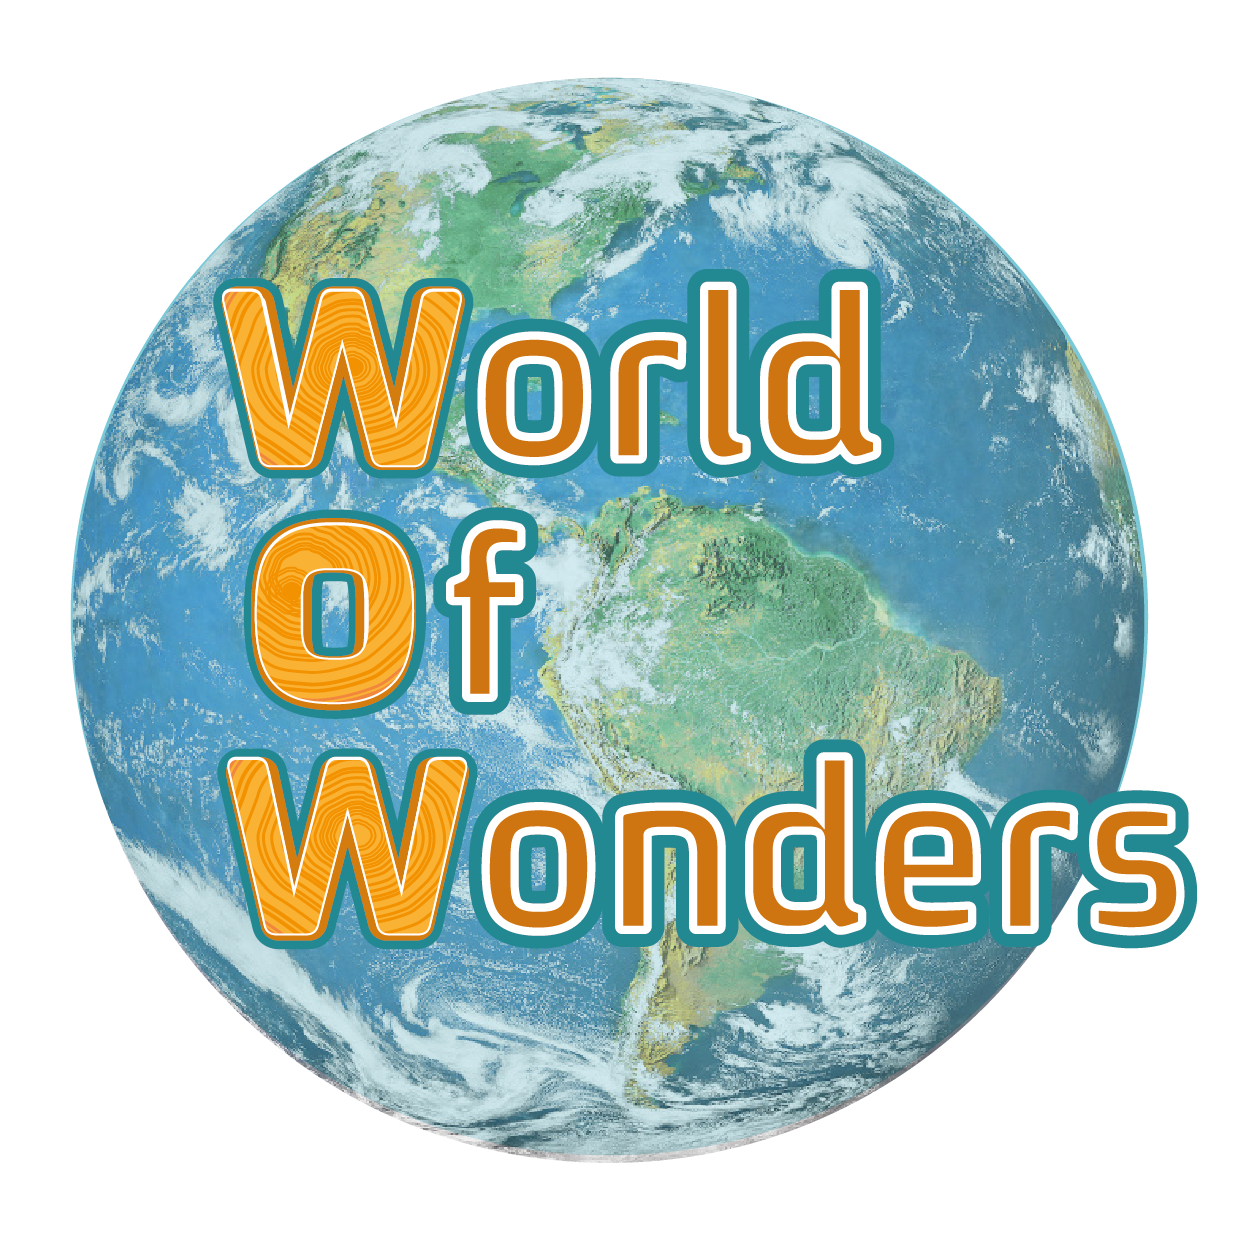 World Of Wonders (WOW)